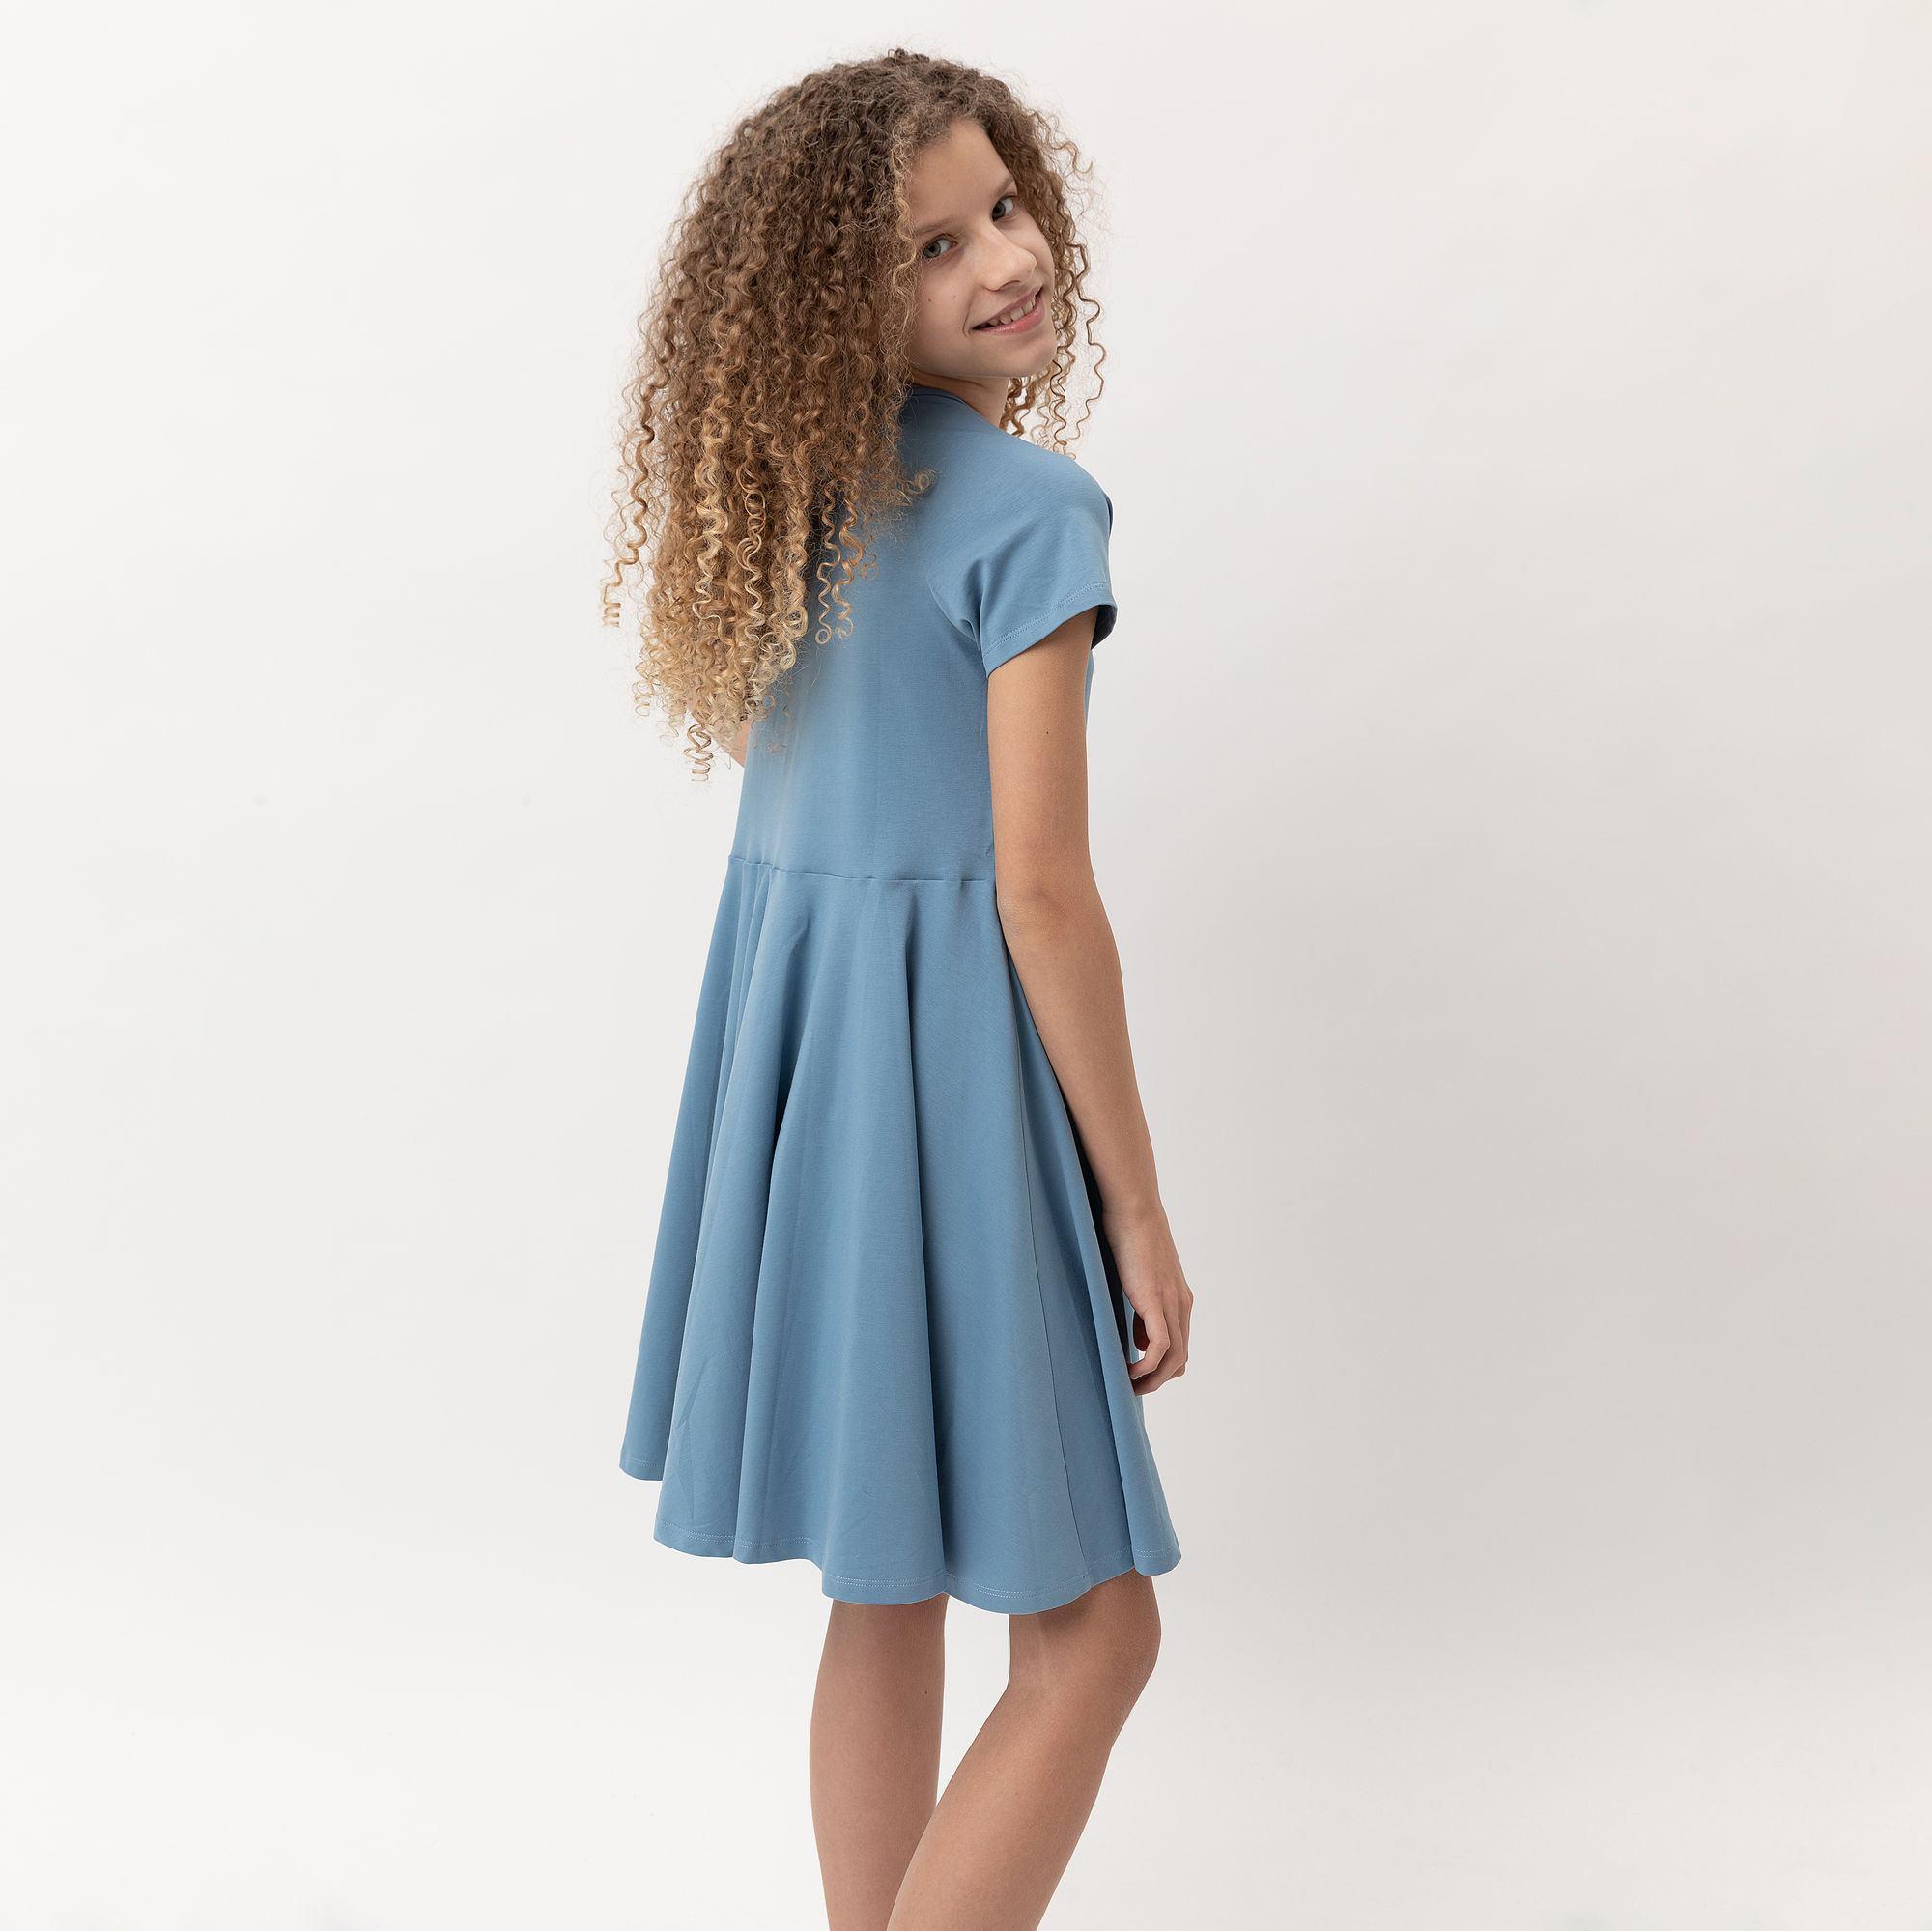 Błękitna sukienka z krótkim rękawem